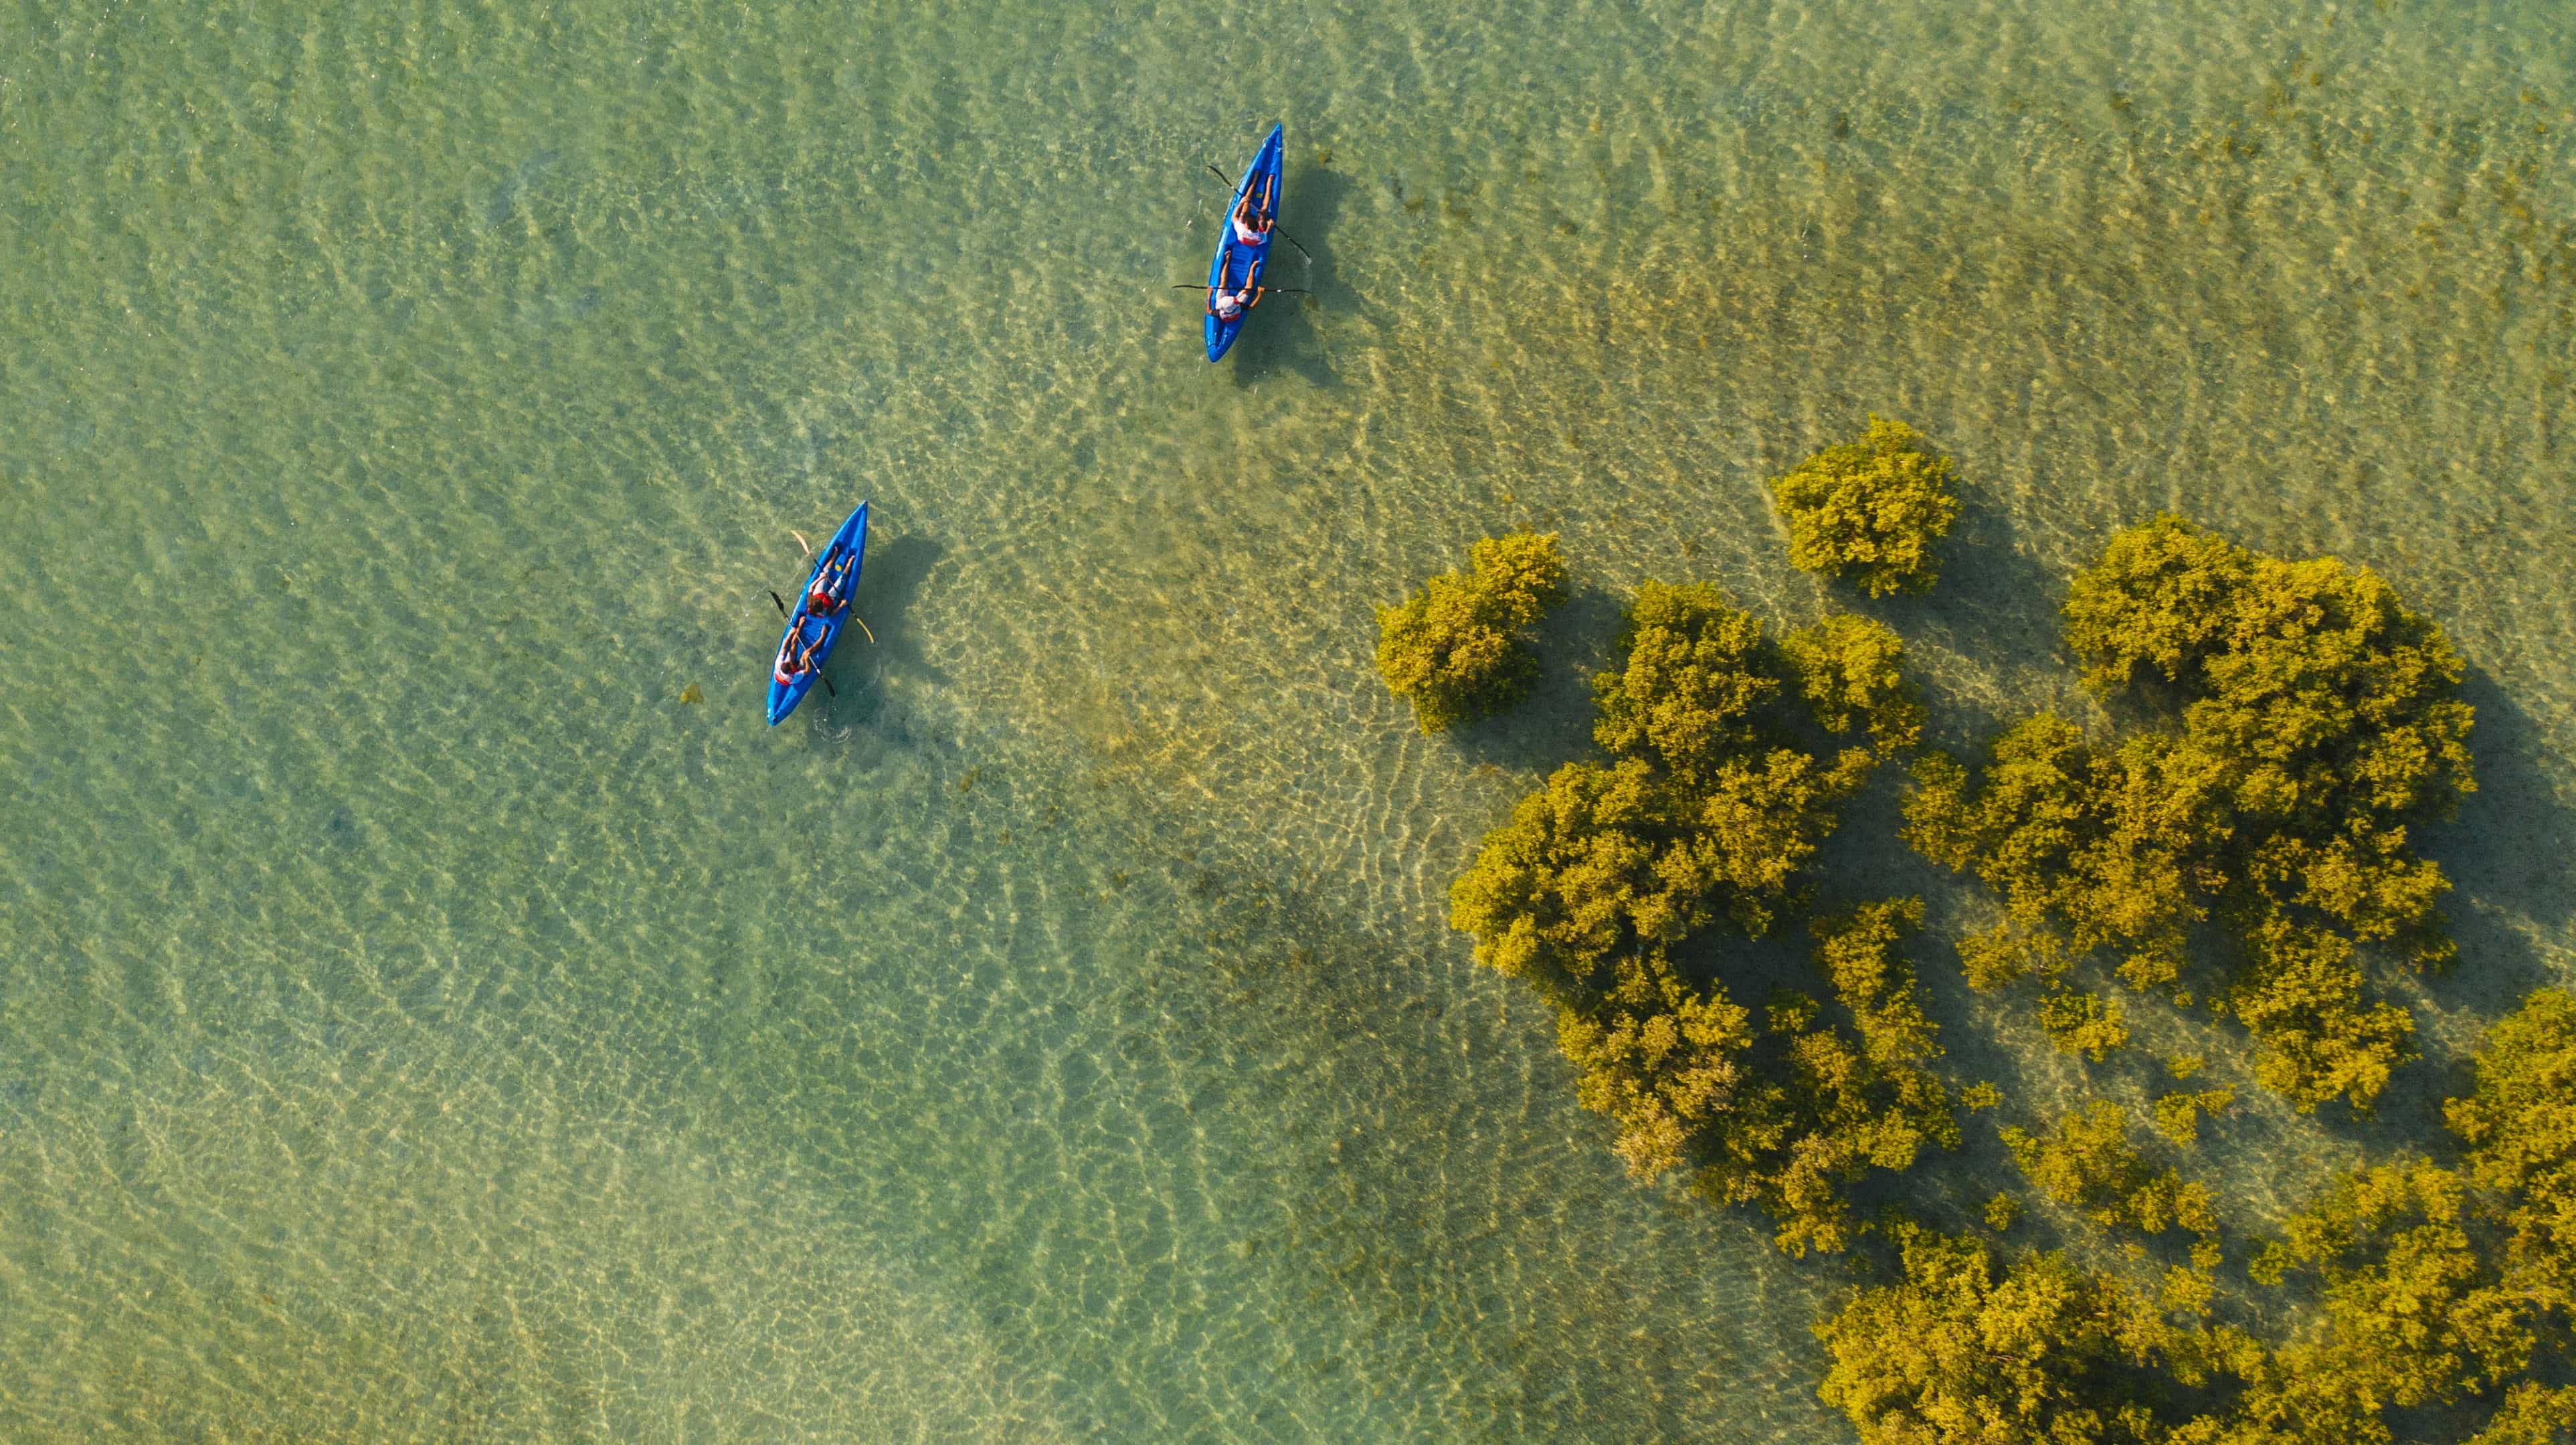 Two blue kayaks paddling near mangrove trees